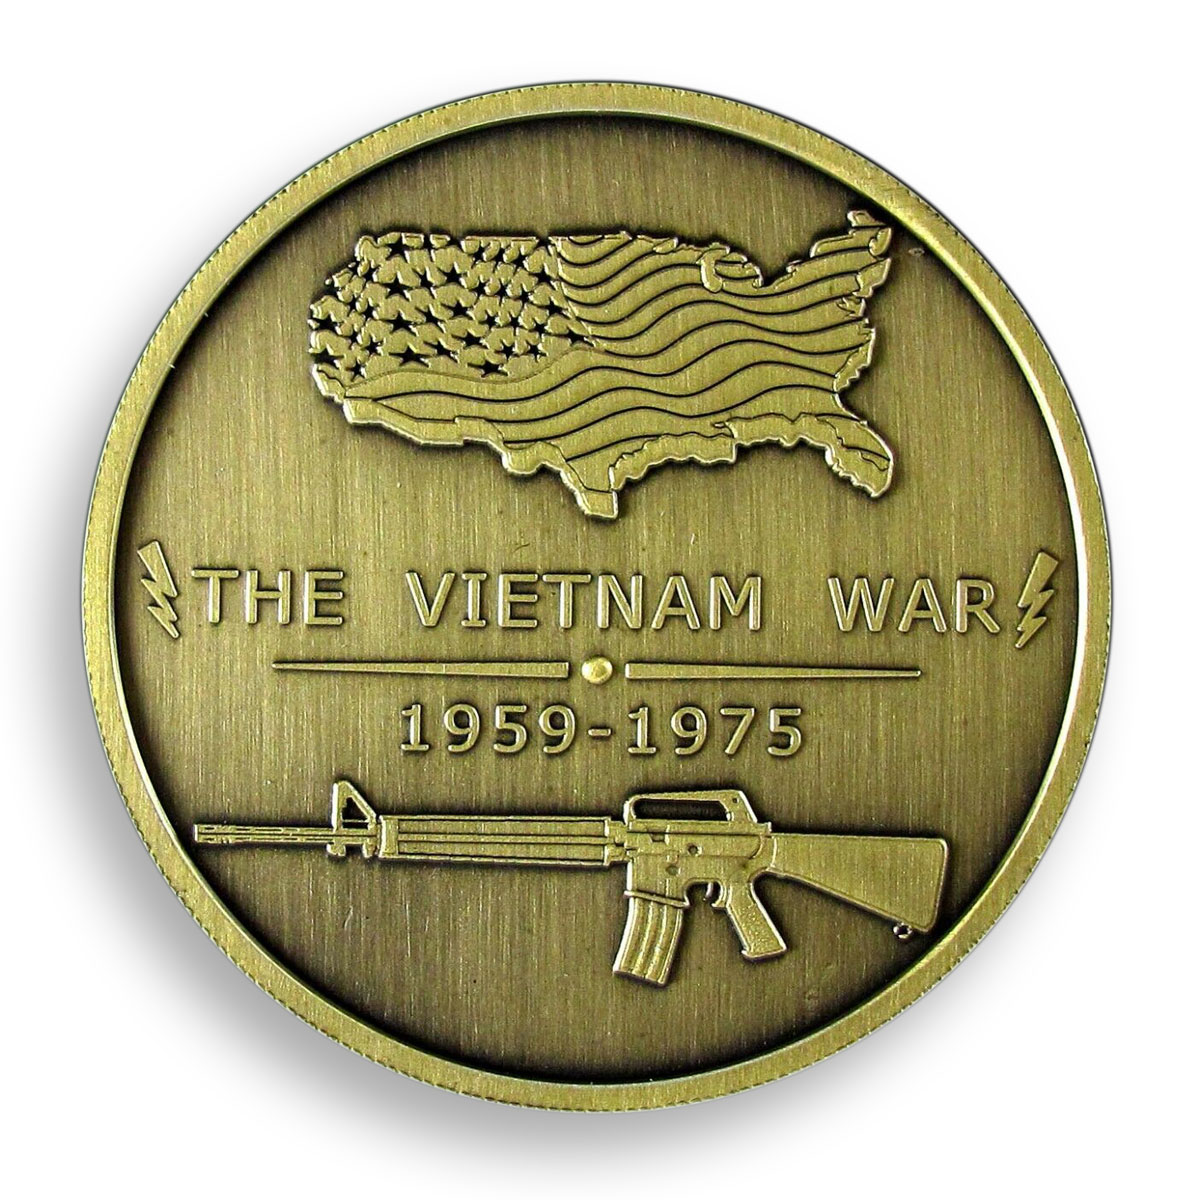 US Army, The Vietnam War, Battle, Honor, Military, Navy, Duty, Courage, Souvenir